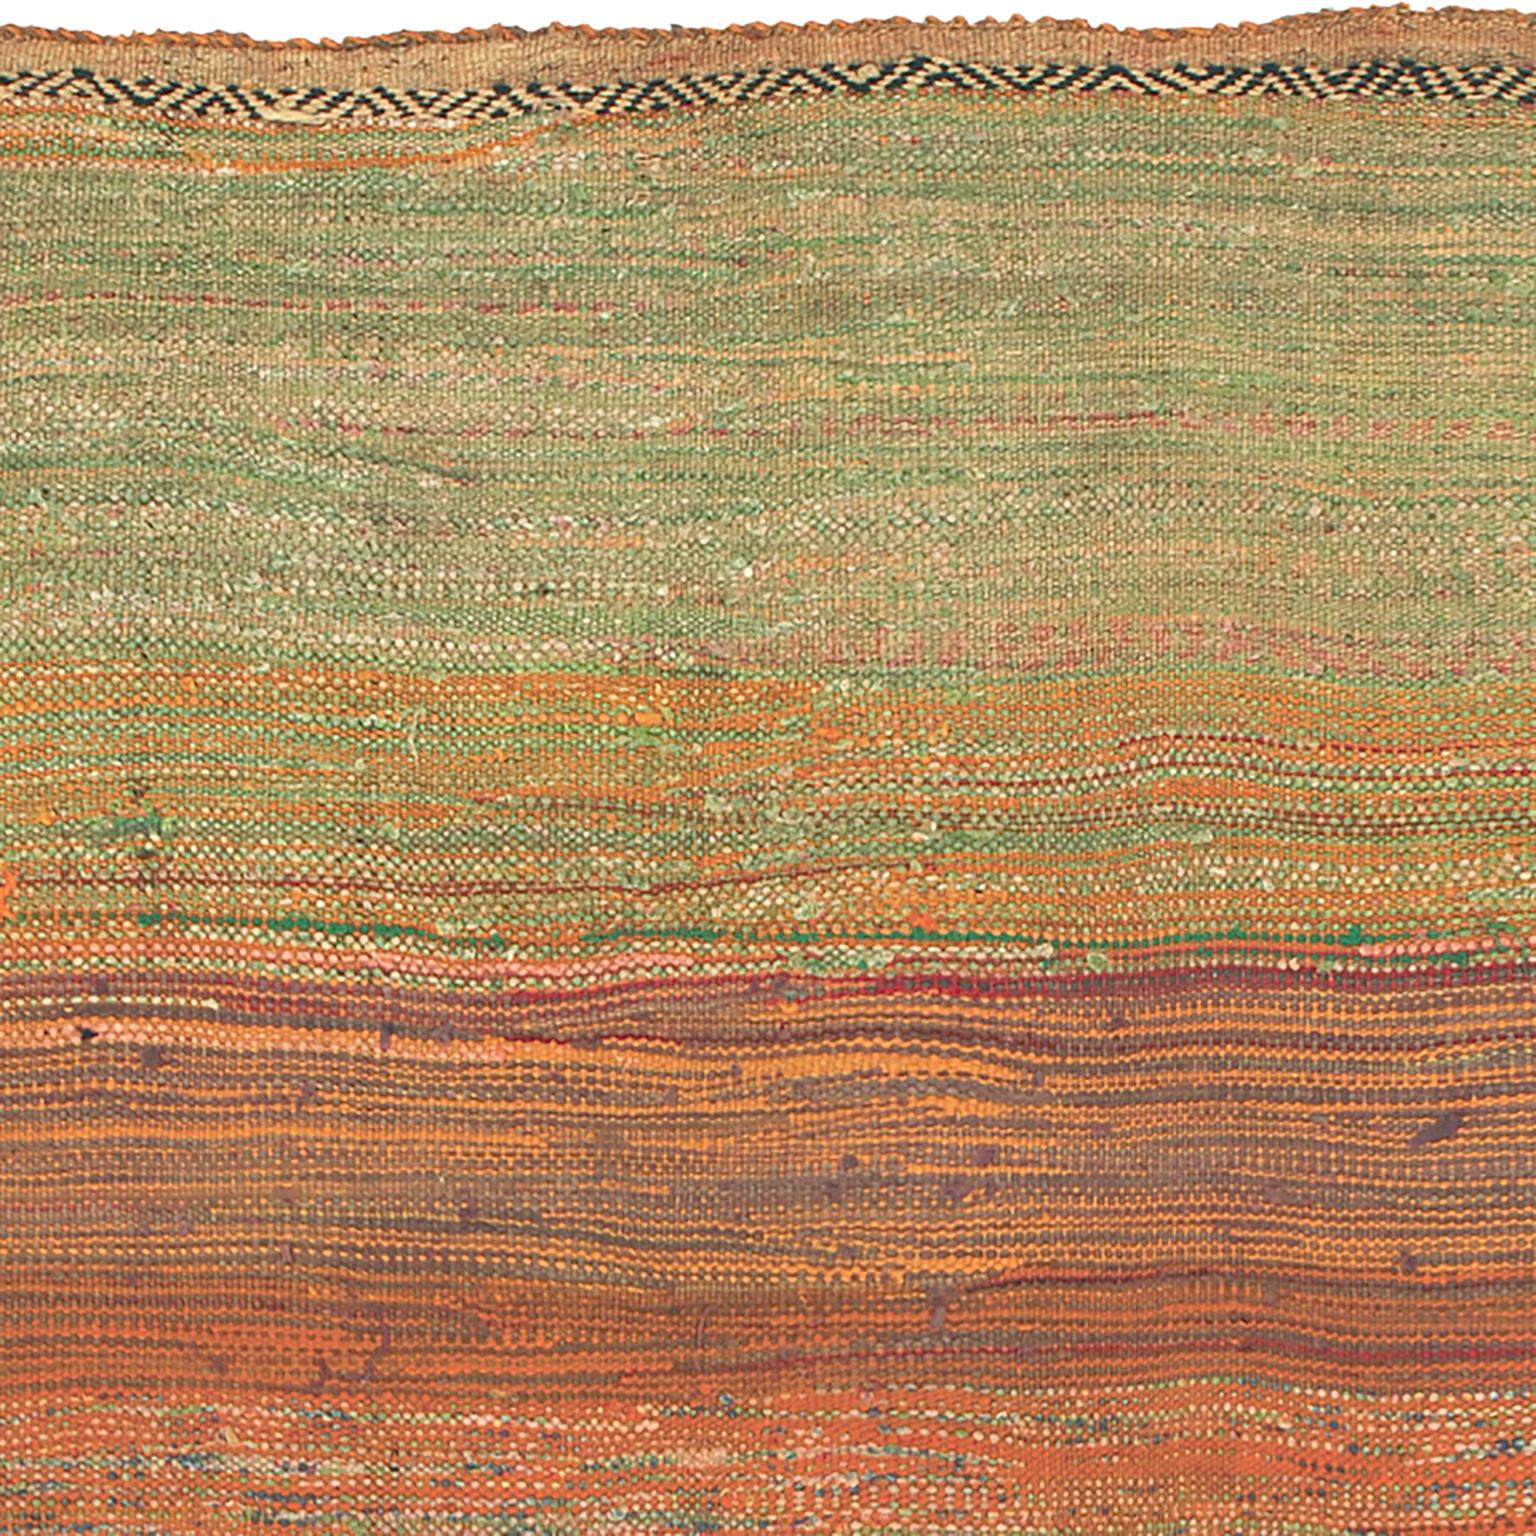 Hand-Woven Mid-20th Century Moroccan Rag Rug